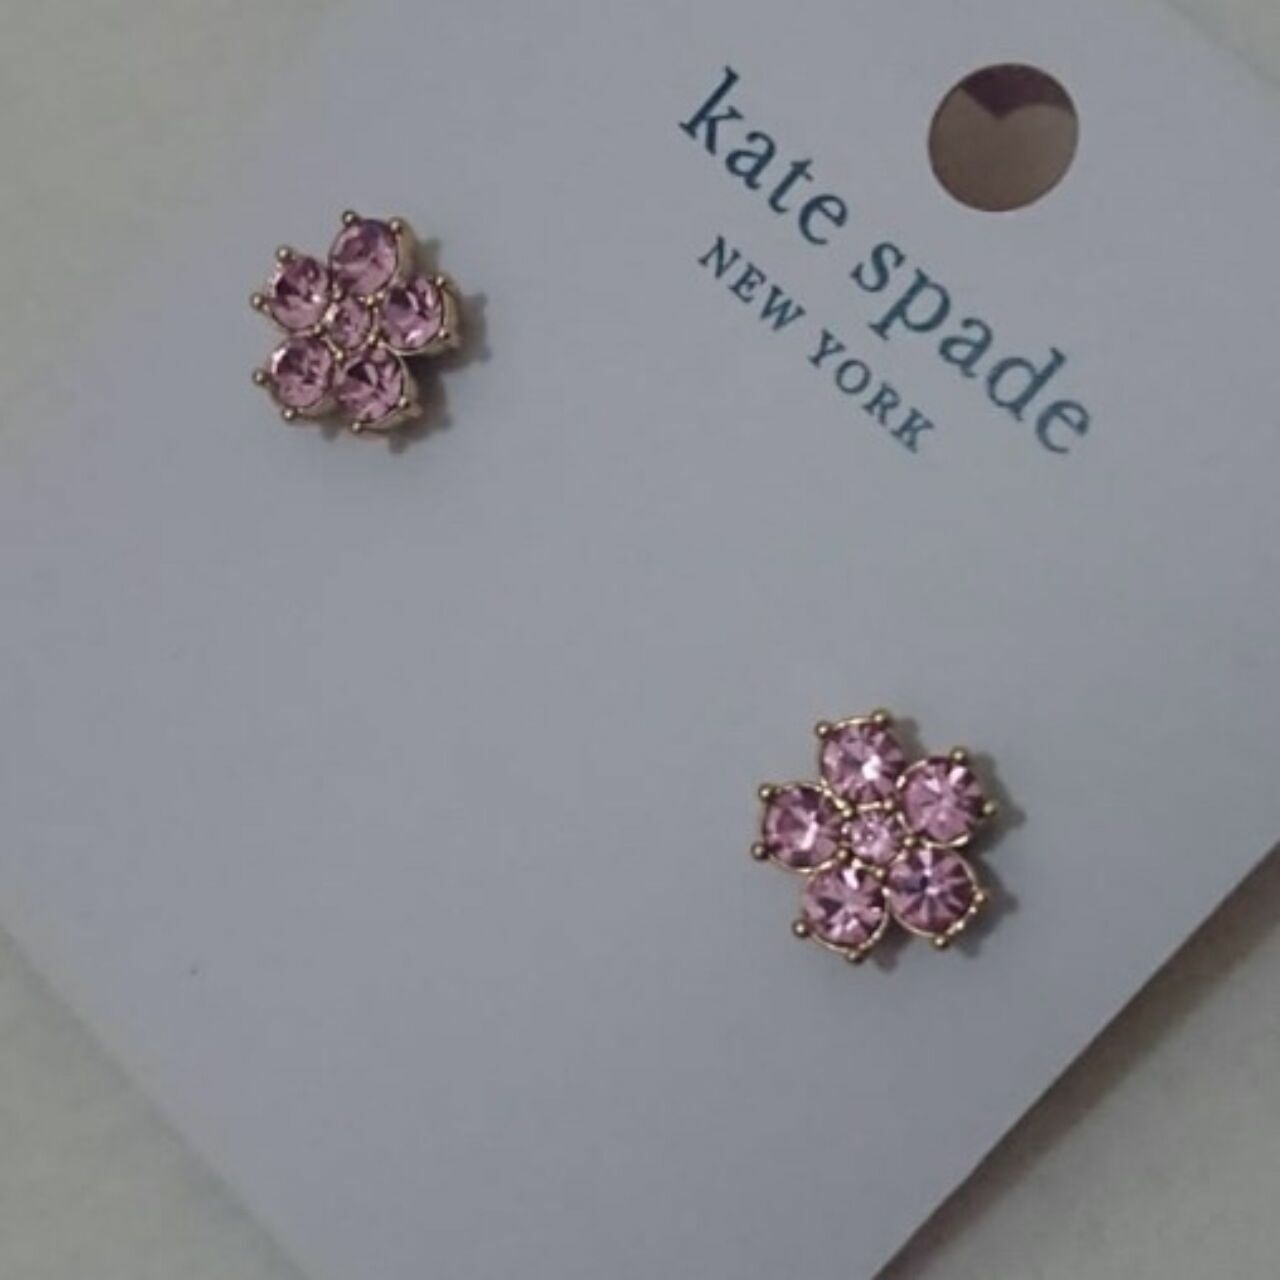 Kate Spade New York Gold Plated Light Pink Flower Stud Earrings